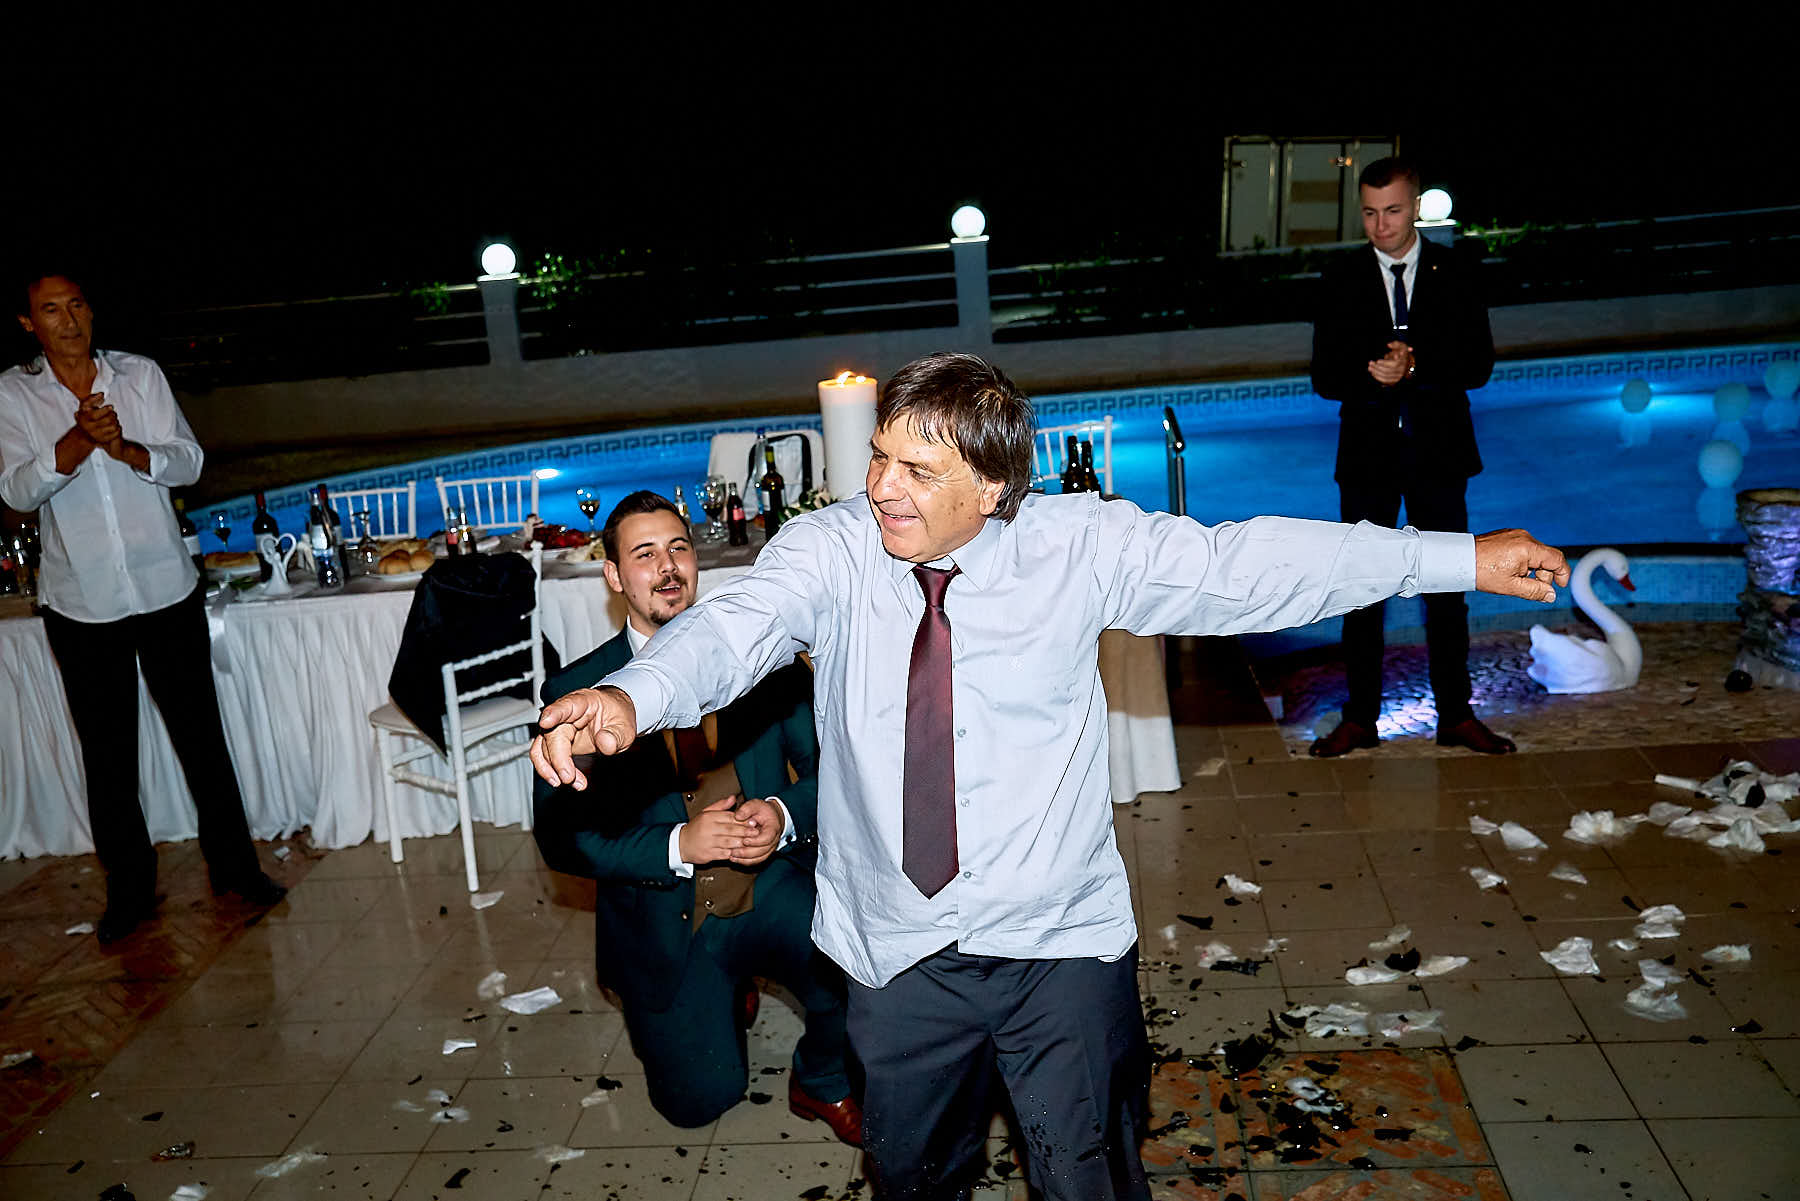 man dancing at wedding ball